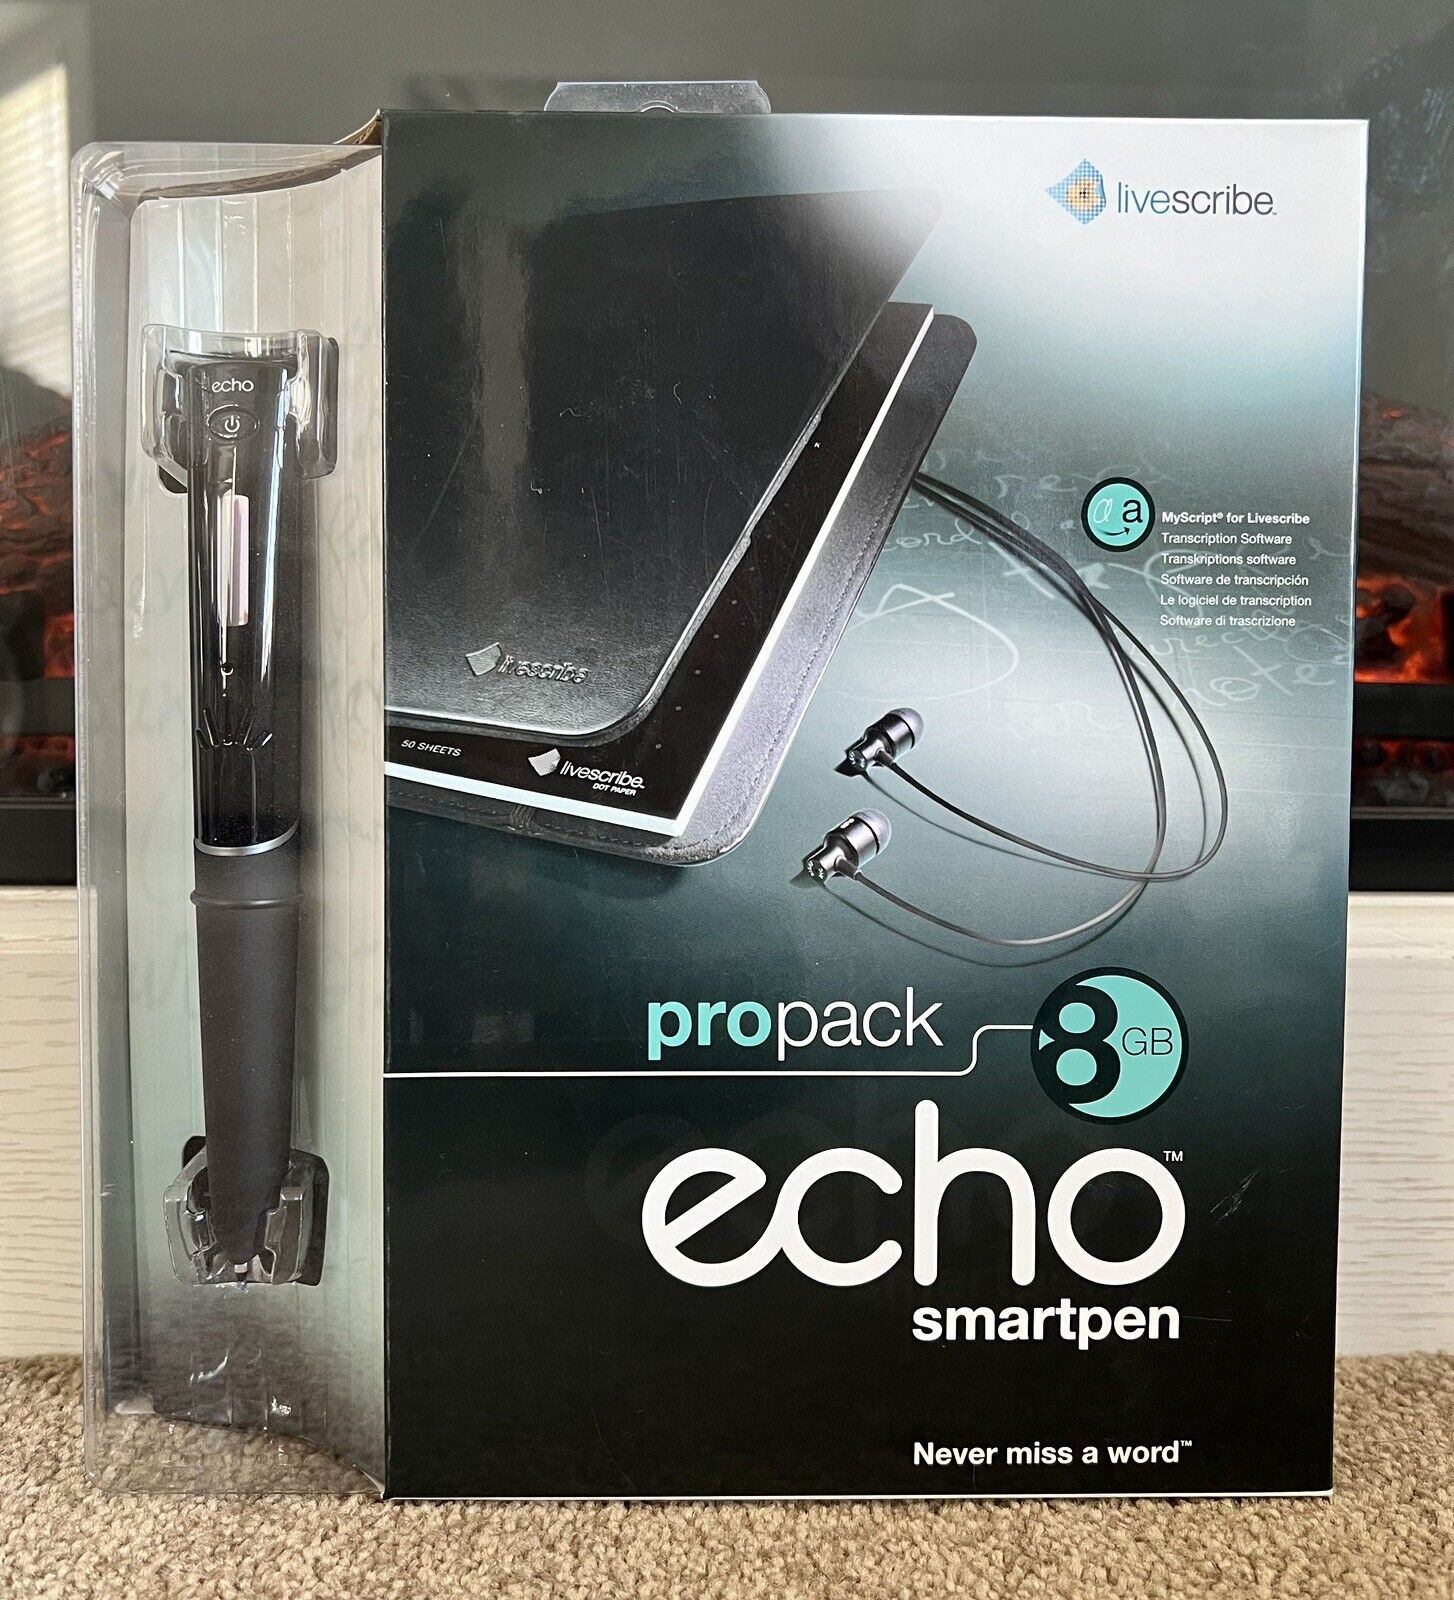 Livescribe Pro Pack 8GB Echo Smartpen. BRAND NEW SEALED